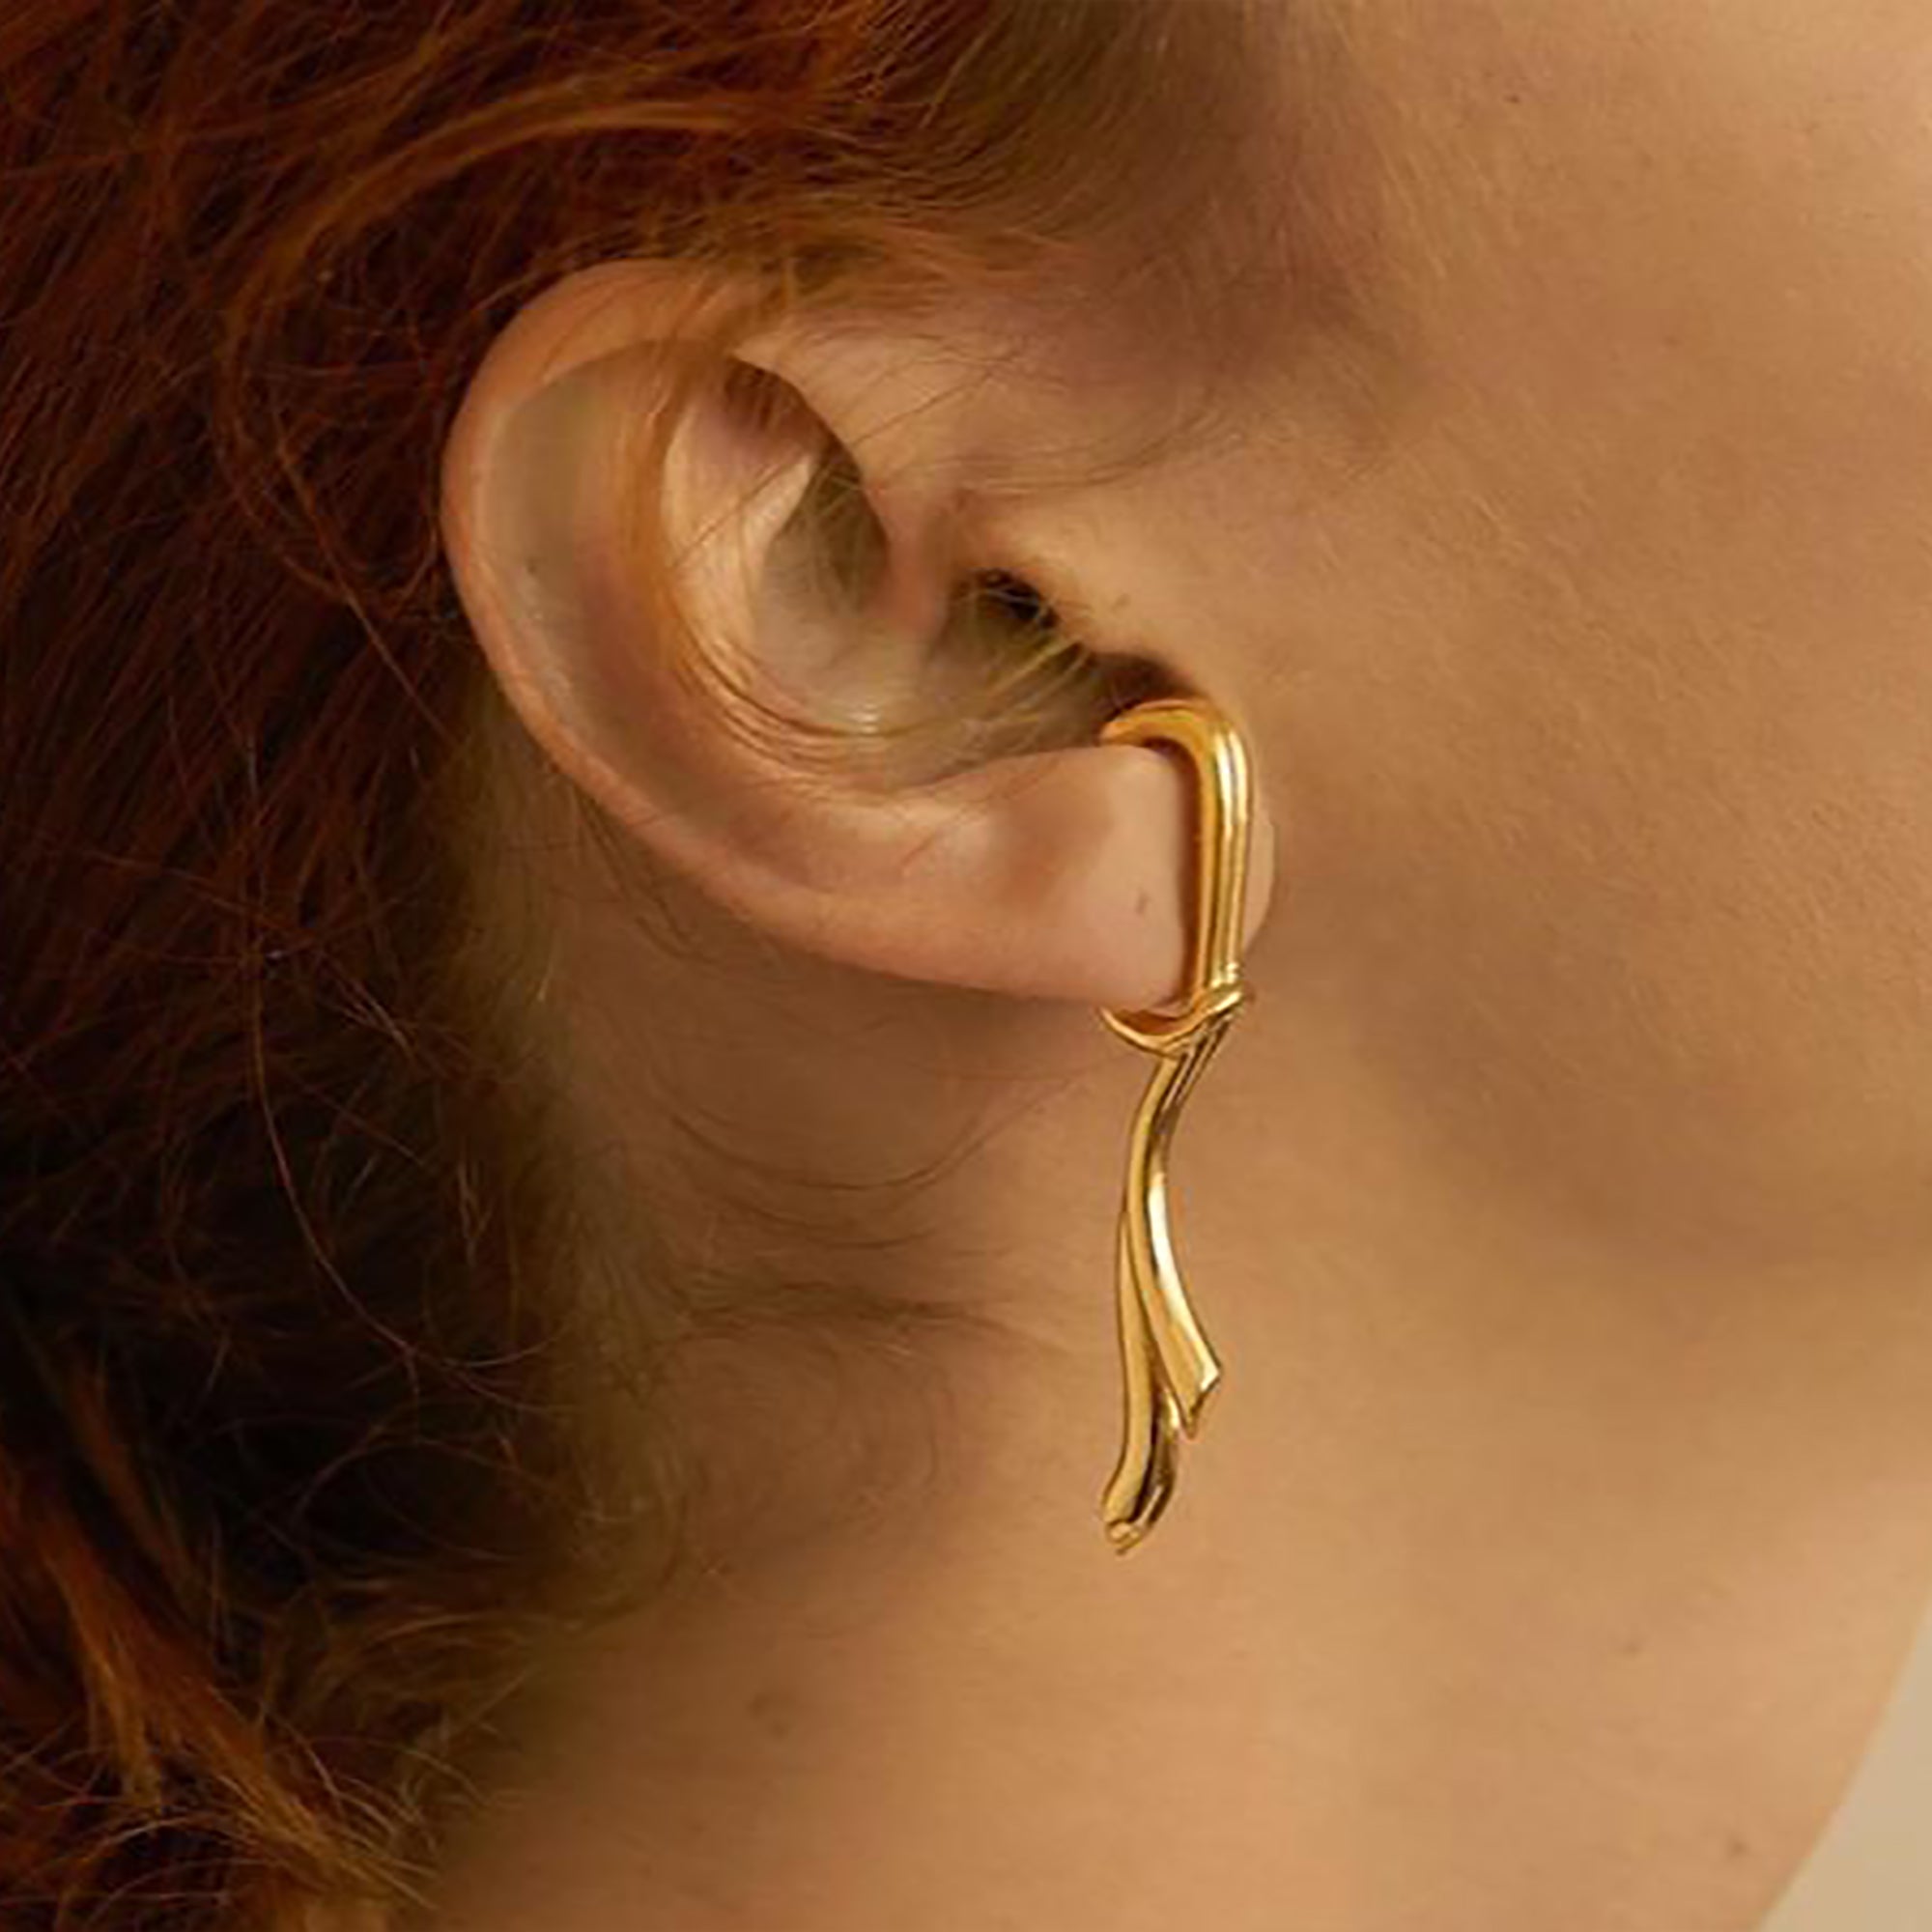 18K Gold Plated Deco Ear Cuff Earrings wedding fashion show gift influencer